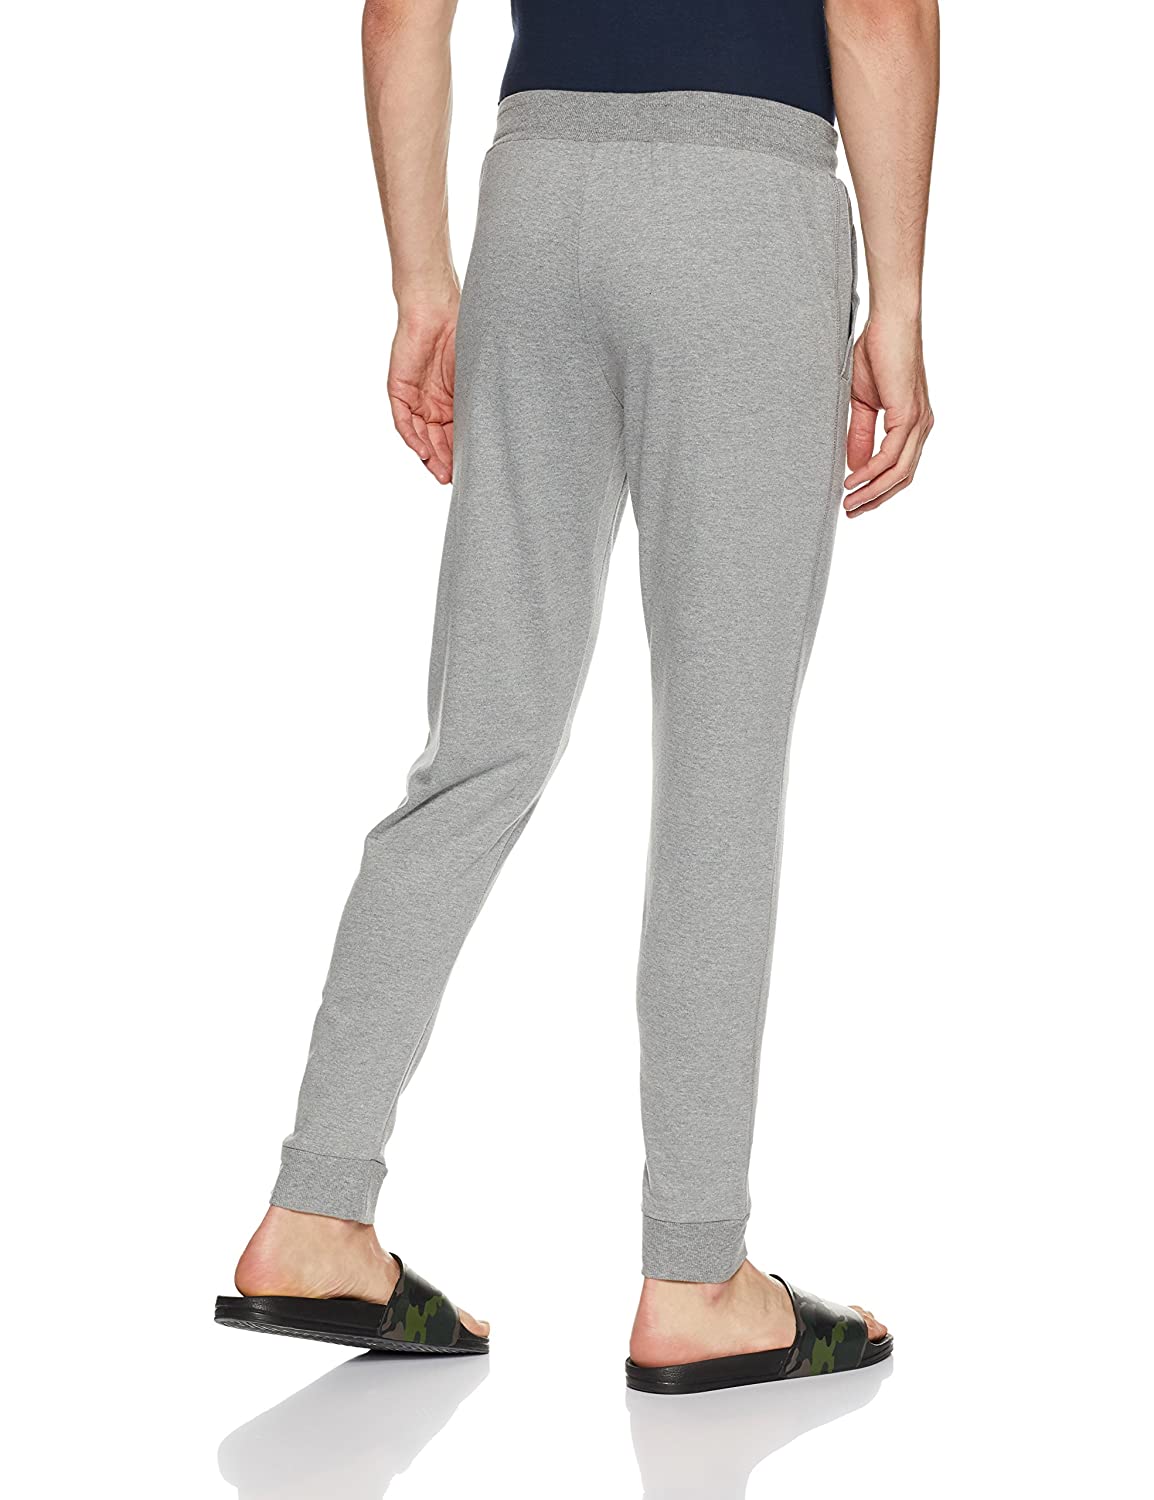 Men's Grey Cotton Pyjamas Bottom Jogger pants - Stilento